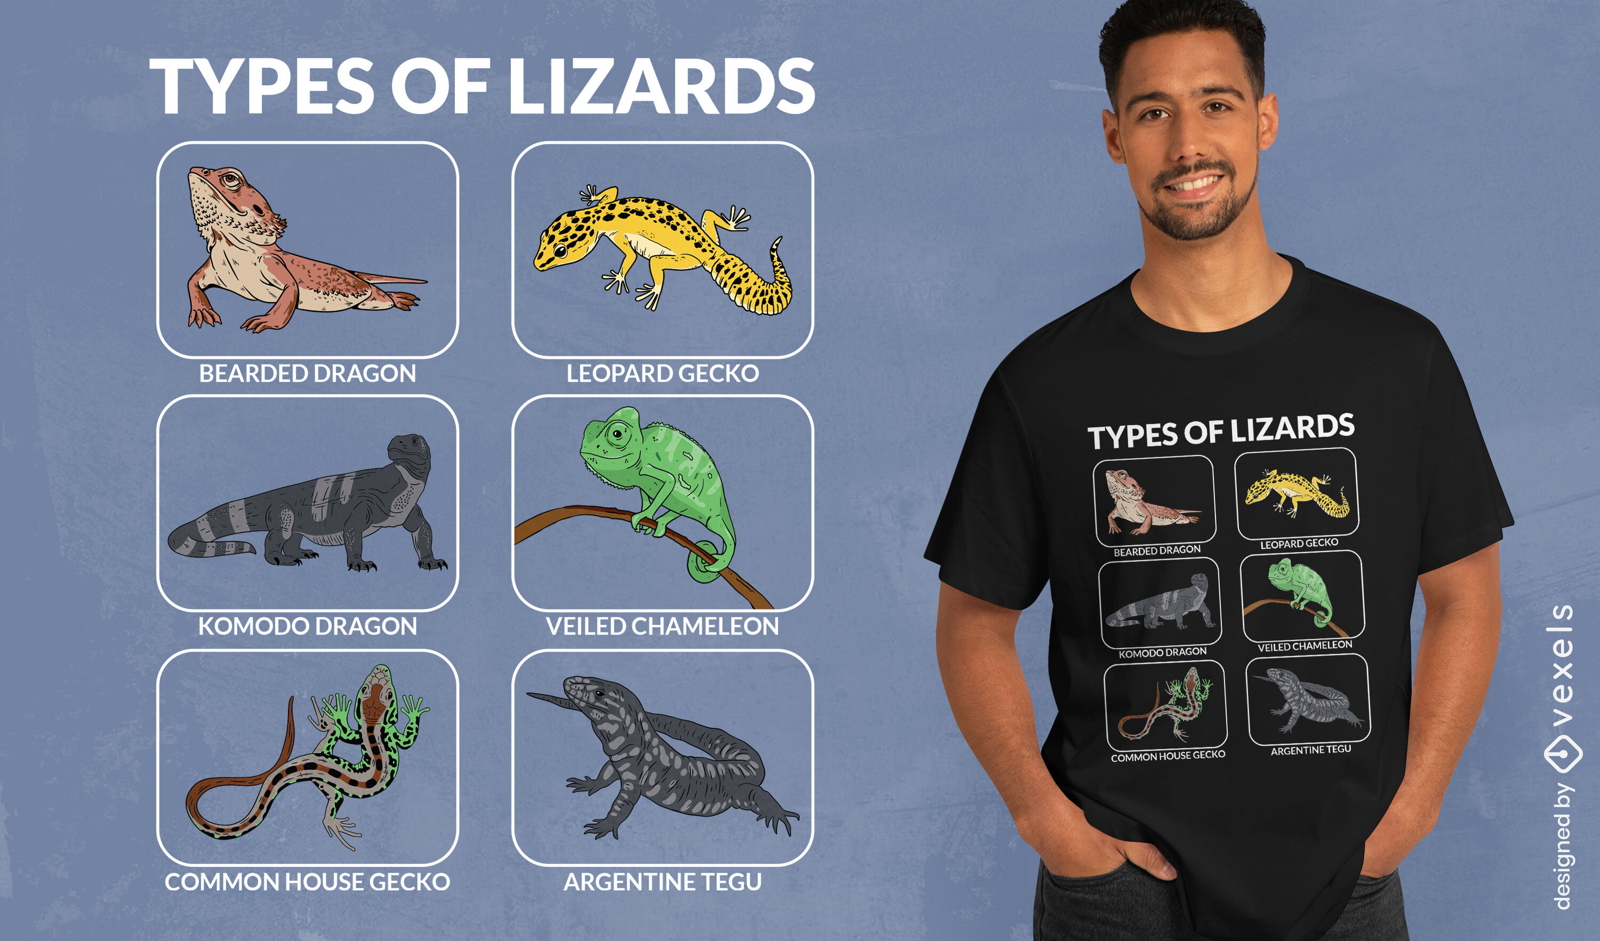 Types of lizards educational t-shirt design